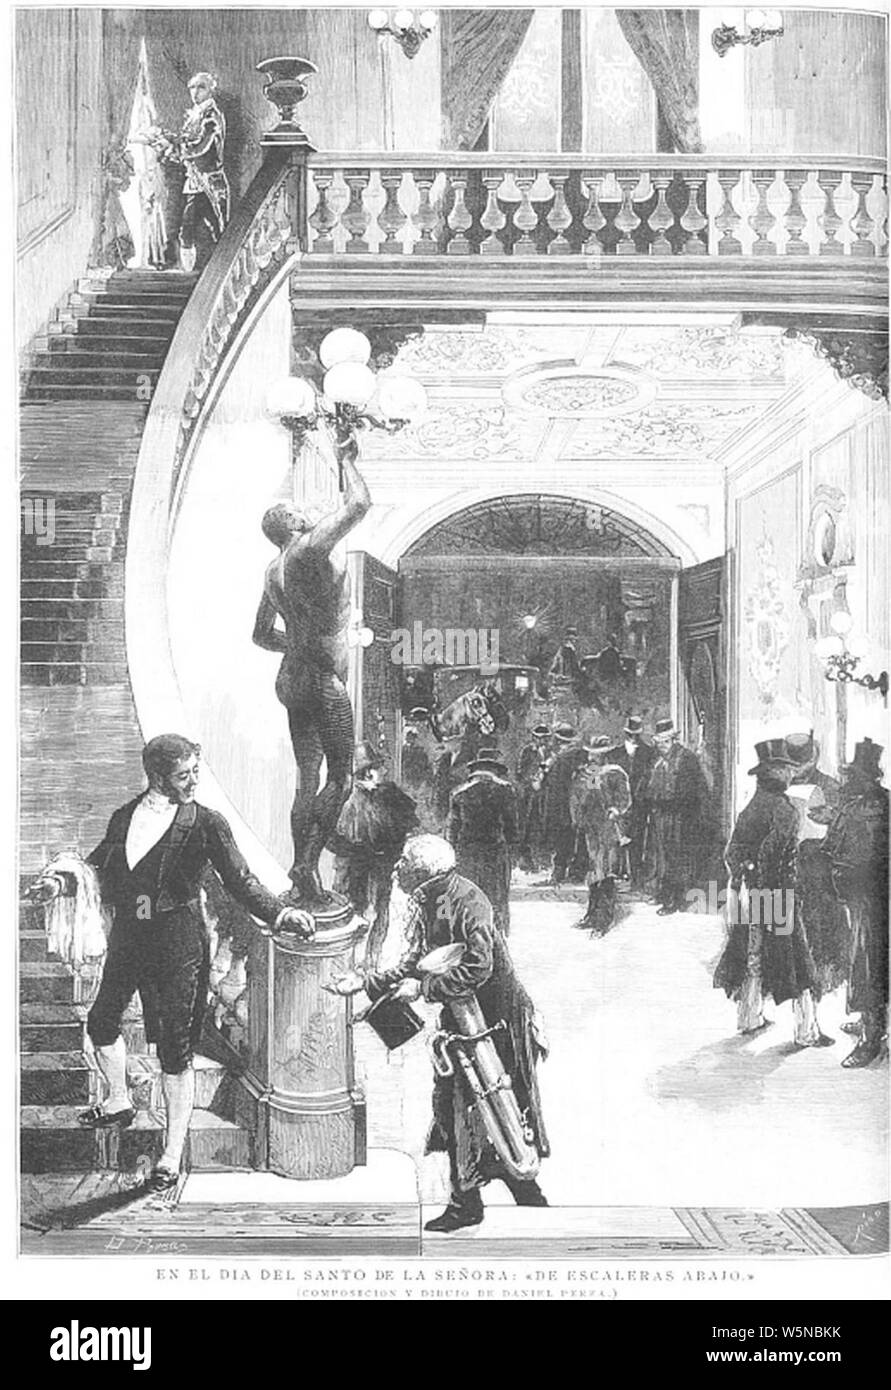 Daniel-Perea-escaleras-abajo-1884. Stock Photo